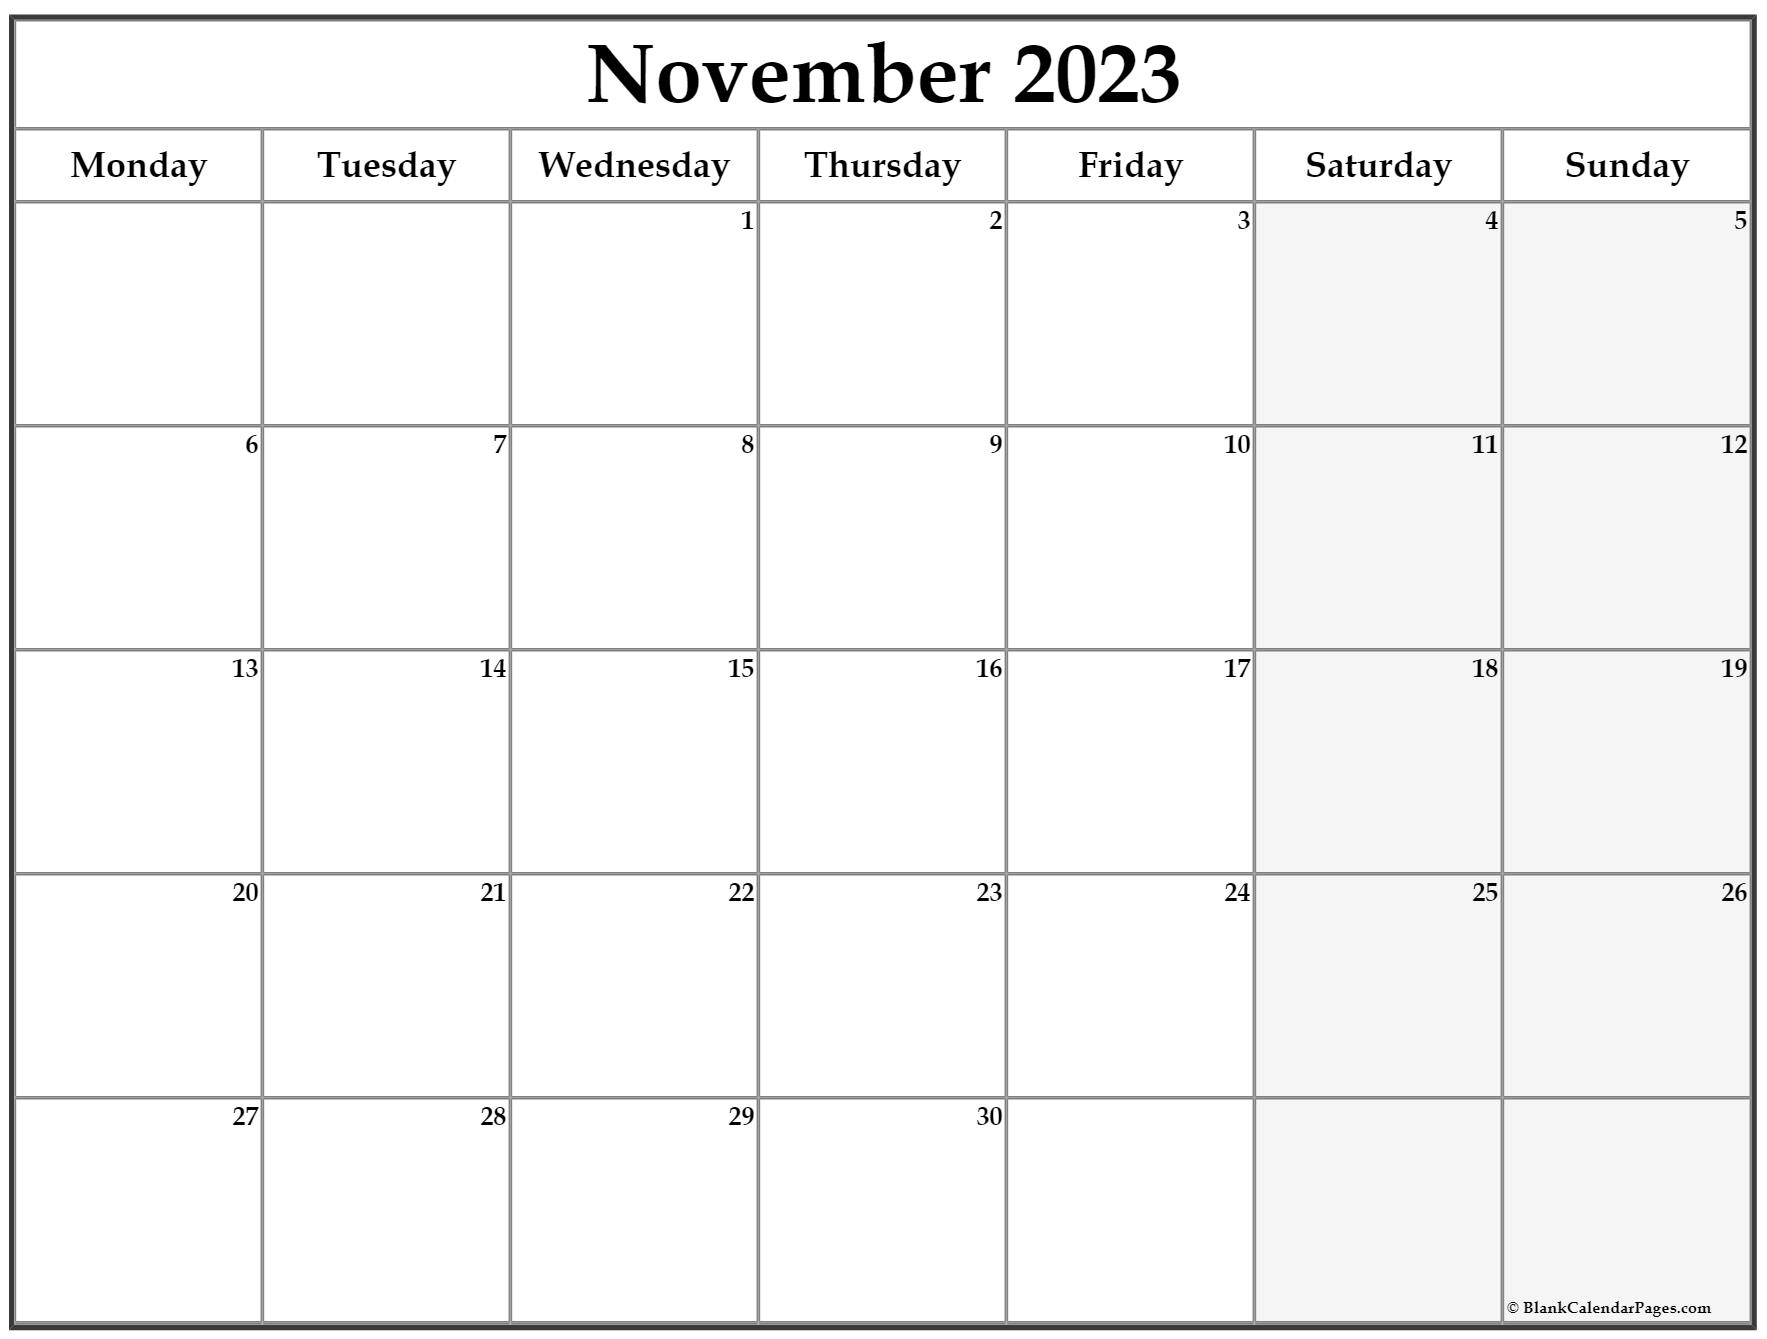 November 2023 Monday Calendar | Monday to Sunday